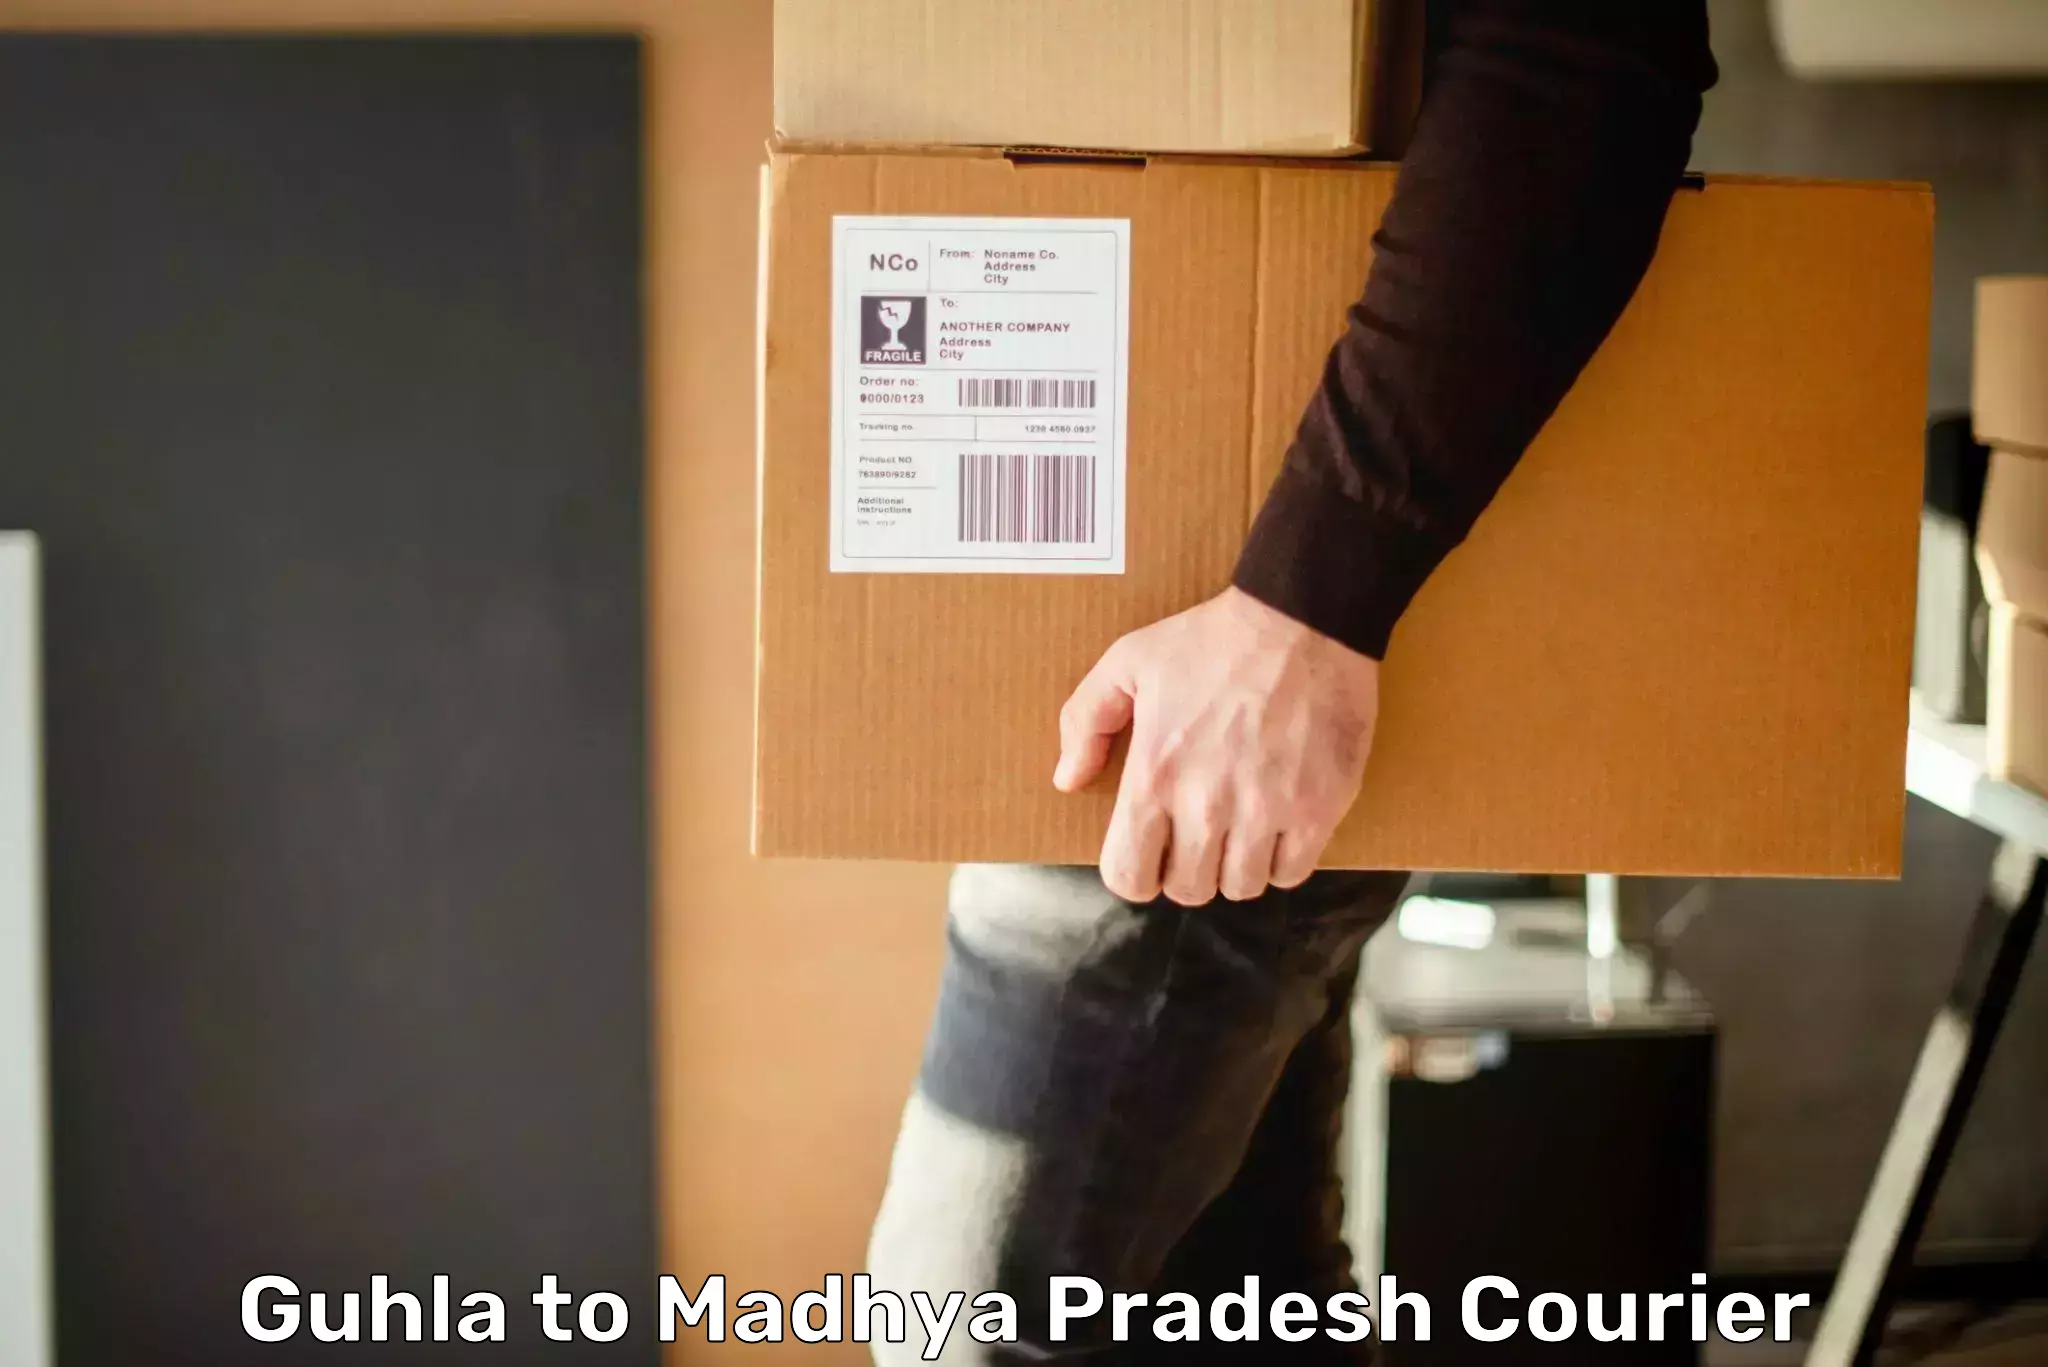 Express logistics providers Guhla to Madhya Pradesh